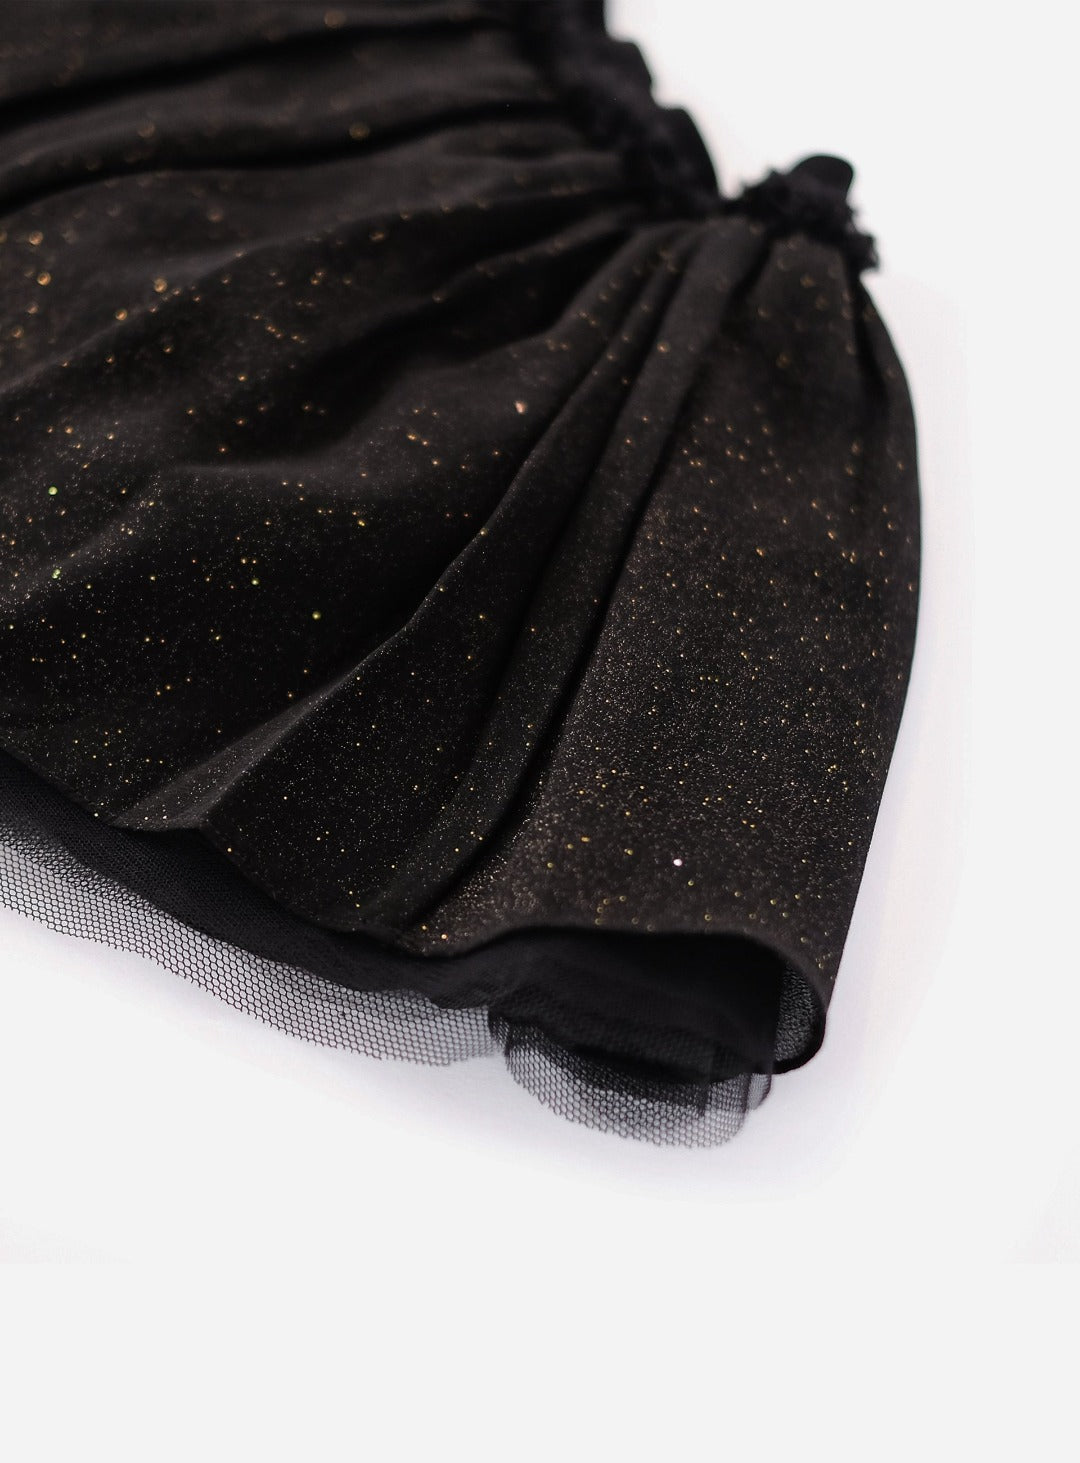 midnight black tutu skirt with gold sparkle